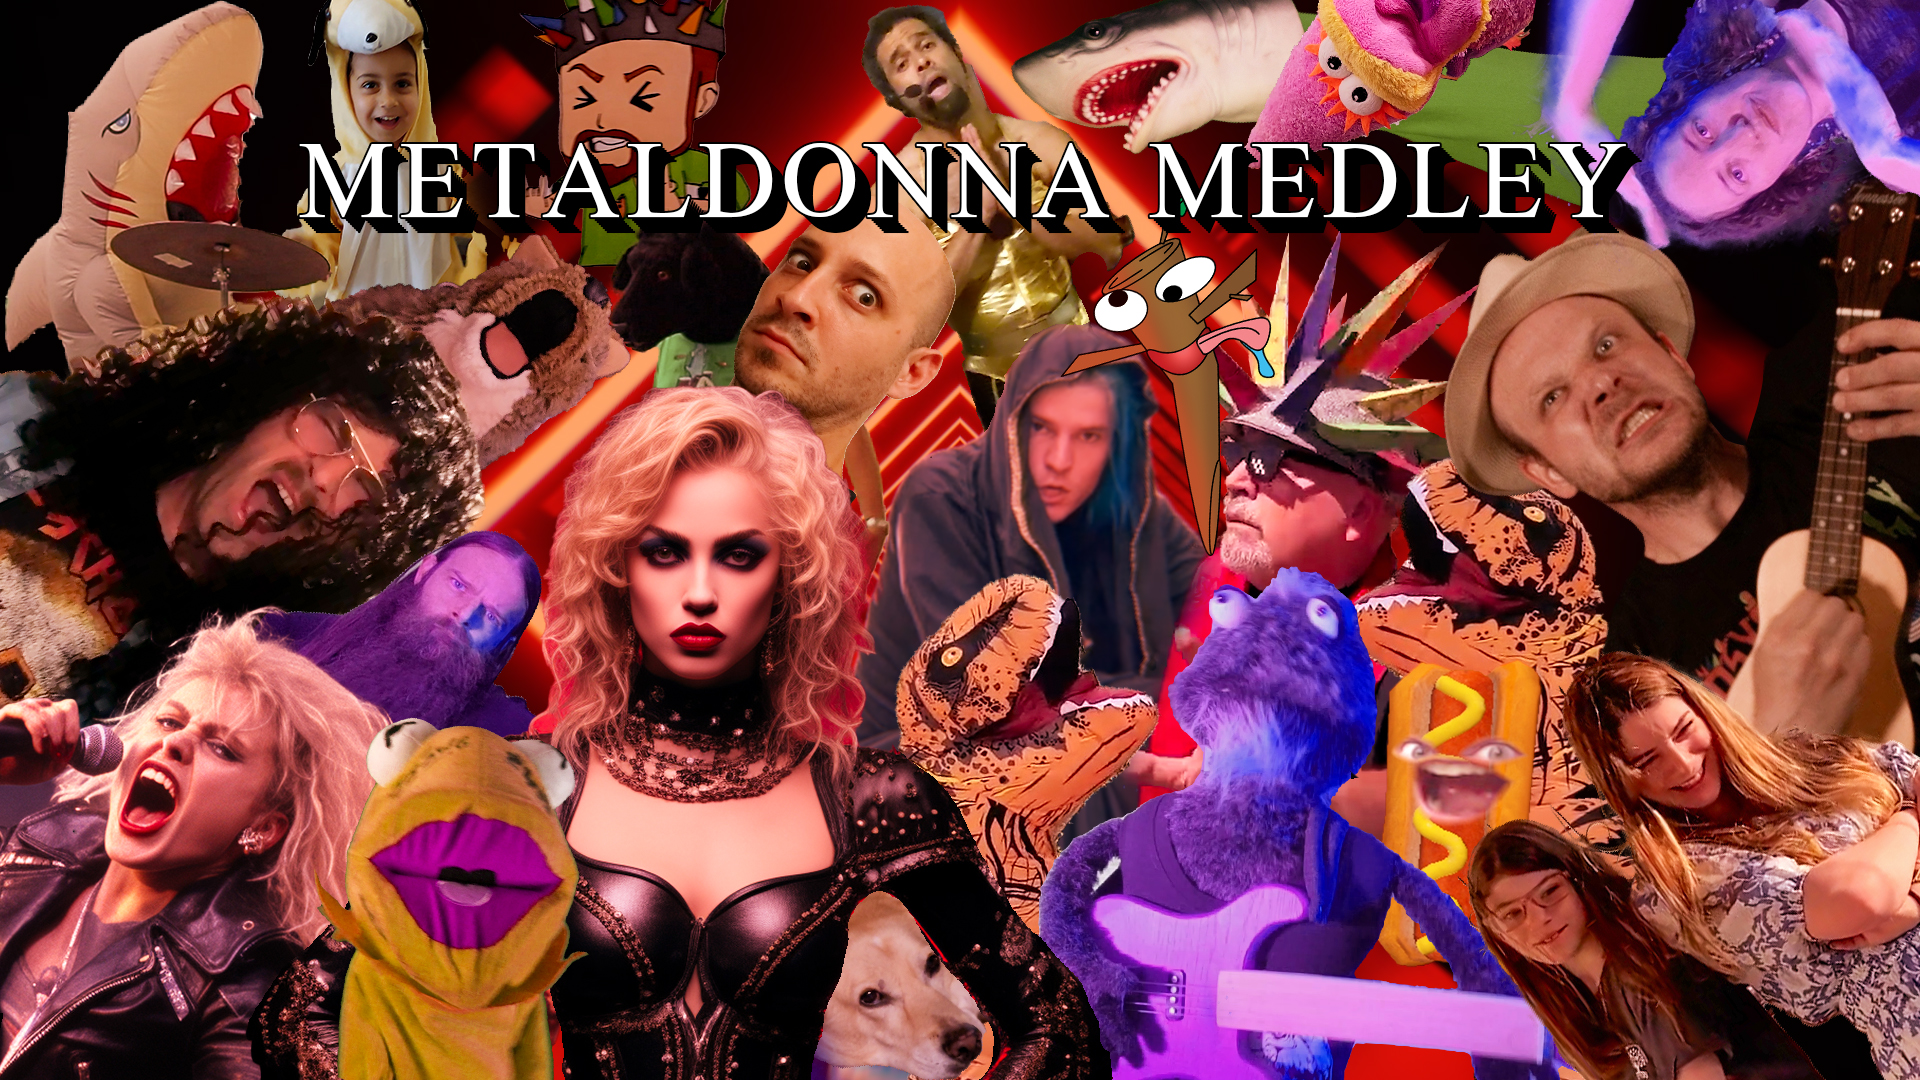 Metaldonna Medley